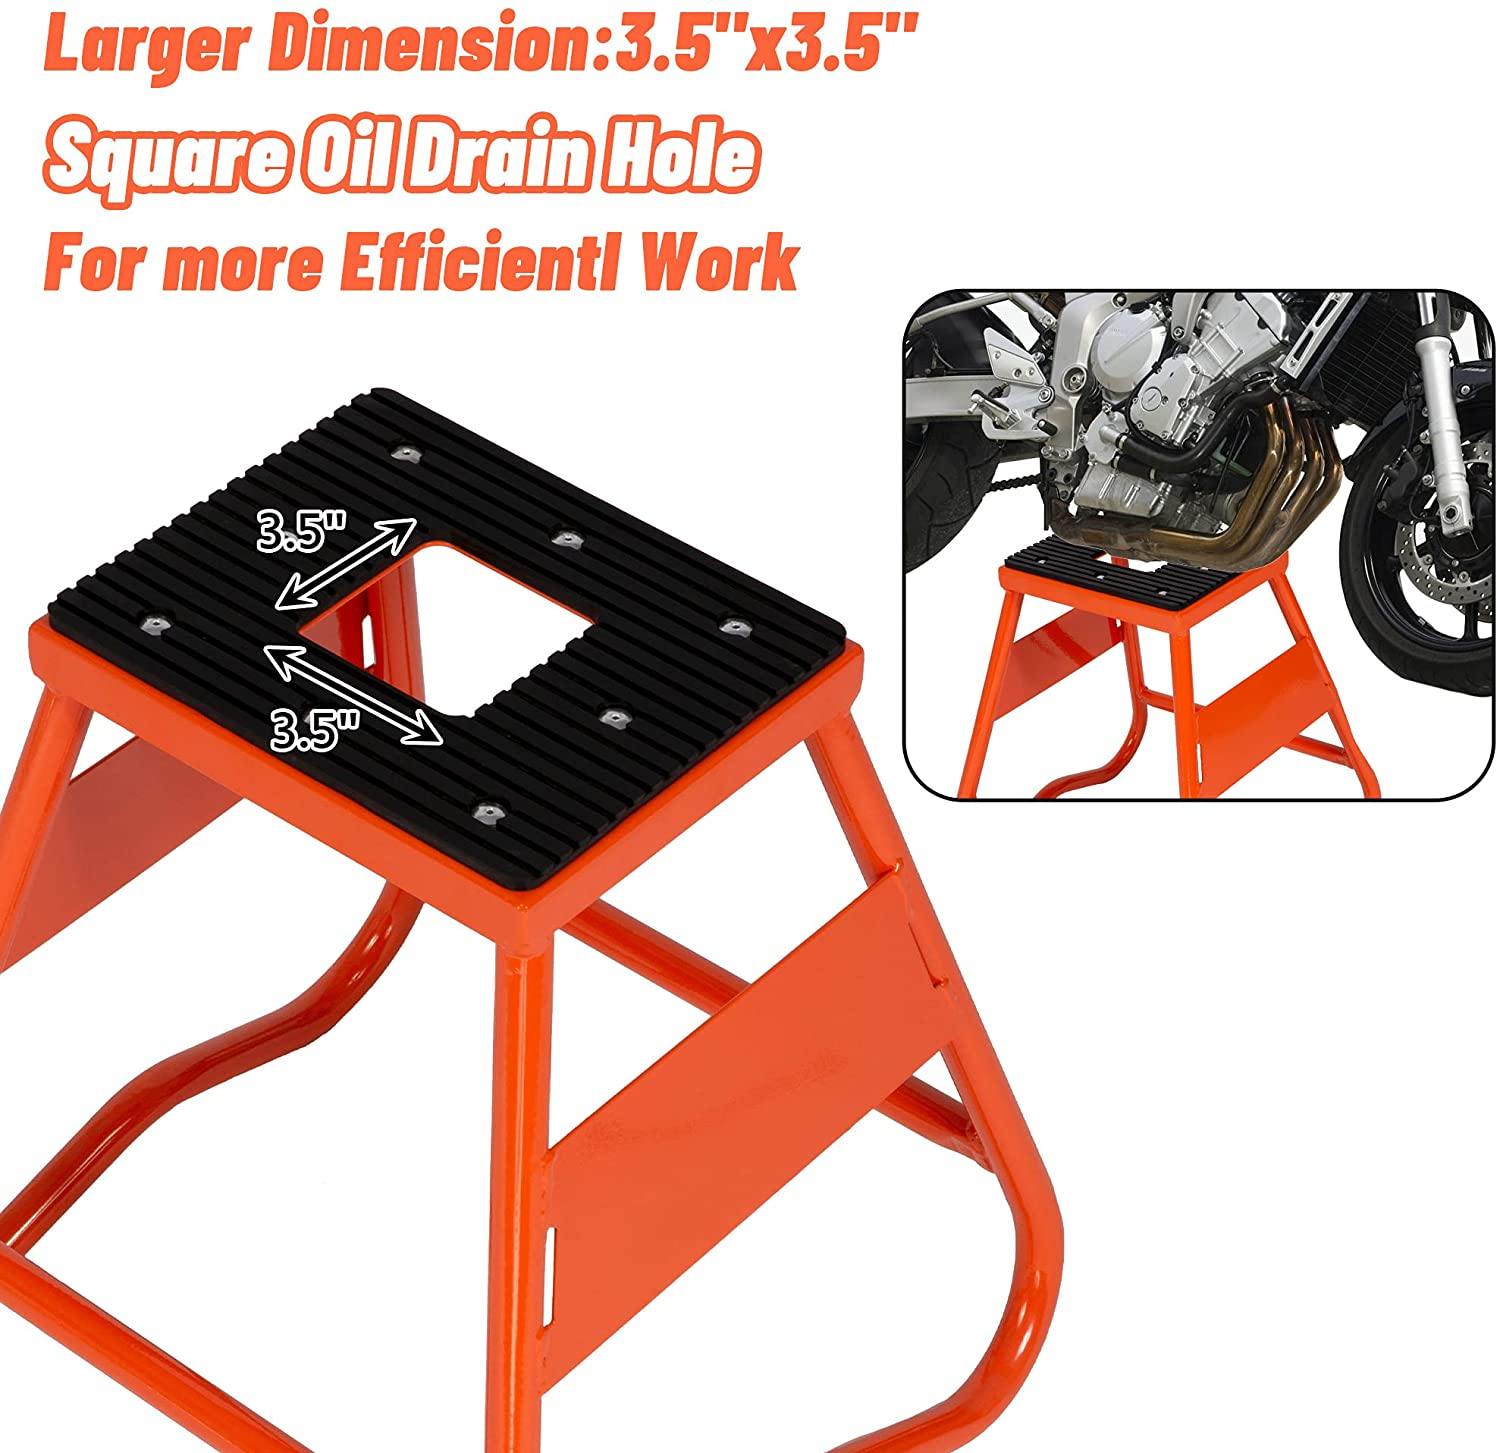 Motocross Dirt Bike Stand Drain Hole Maintenance Lift Jack 330 LBS Capacity - Bosonshop